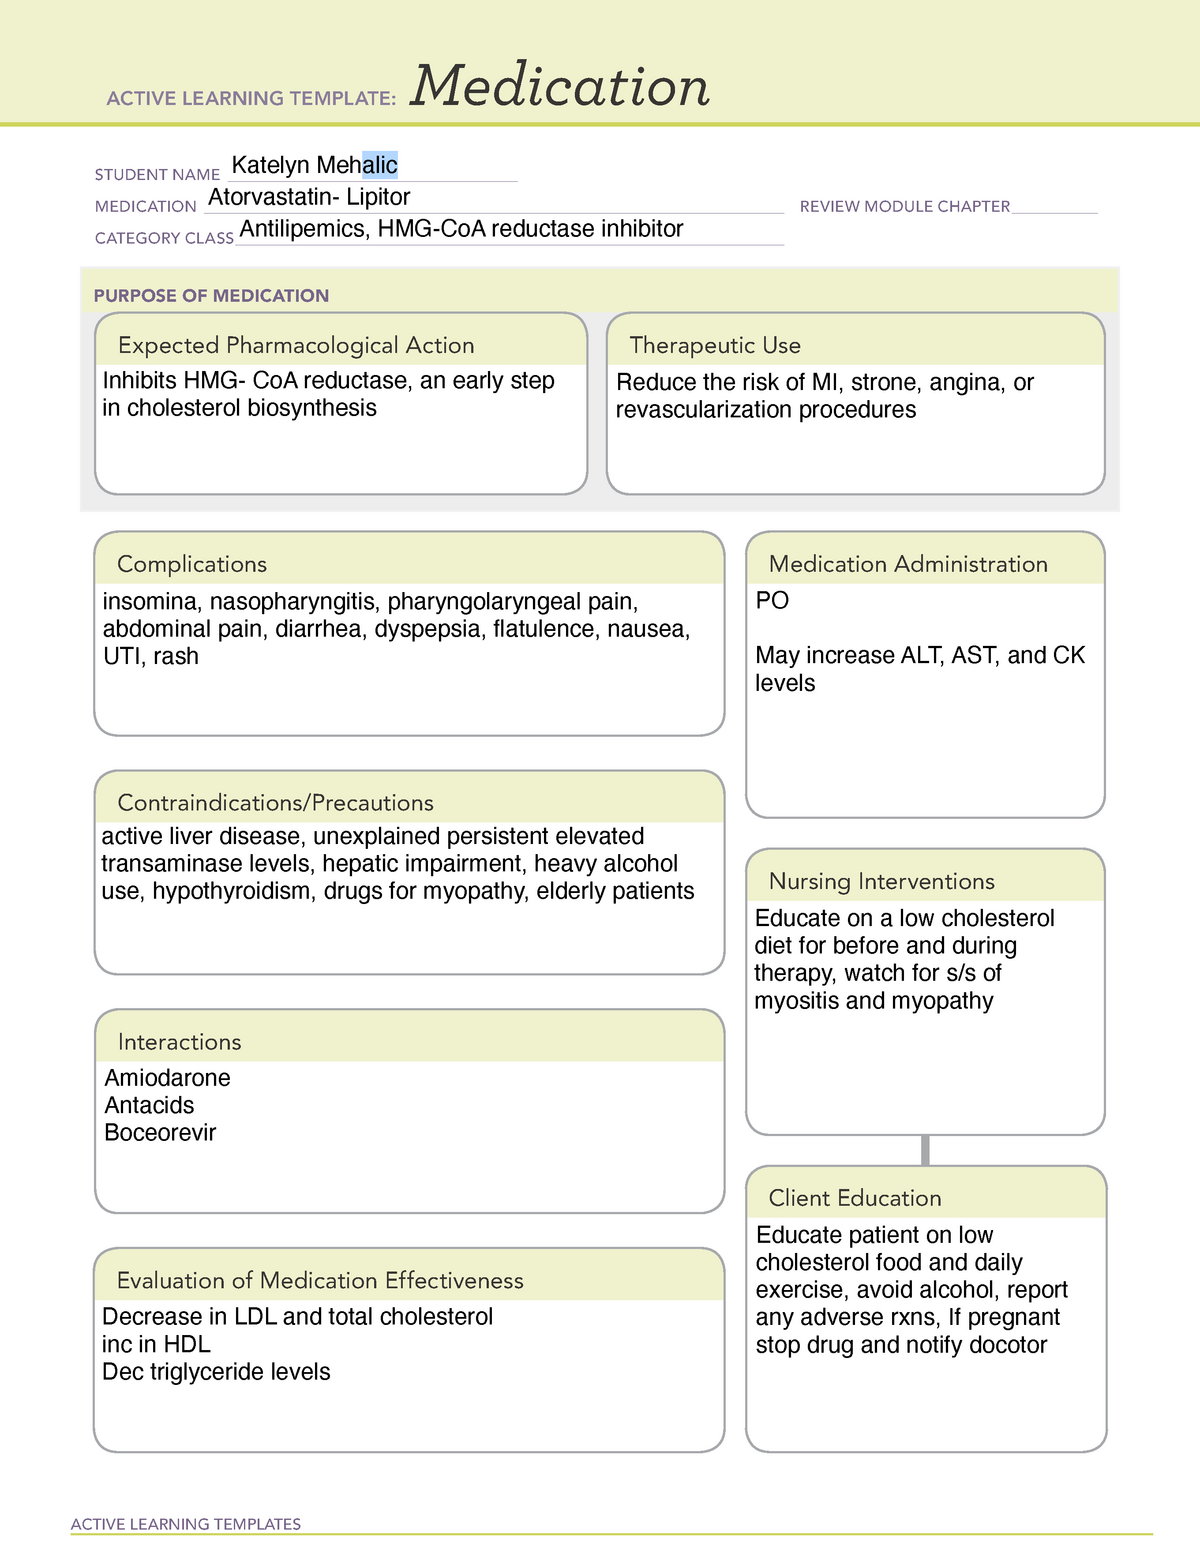 atorvastatin-ati-medication-template